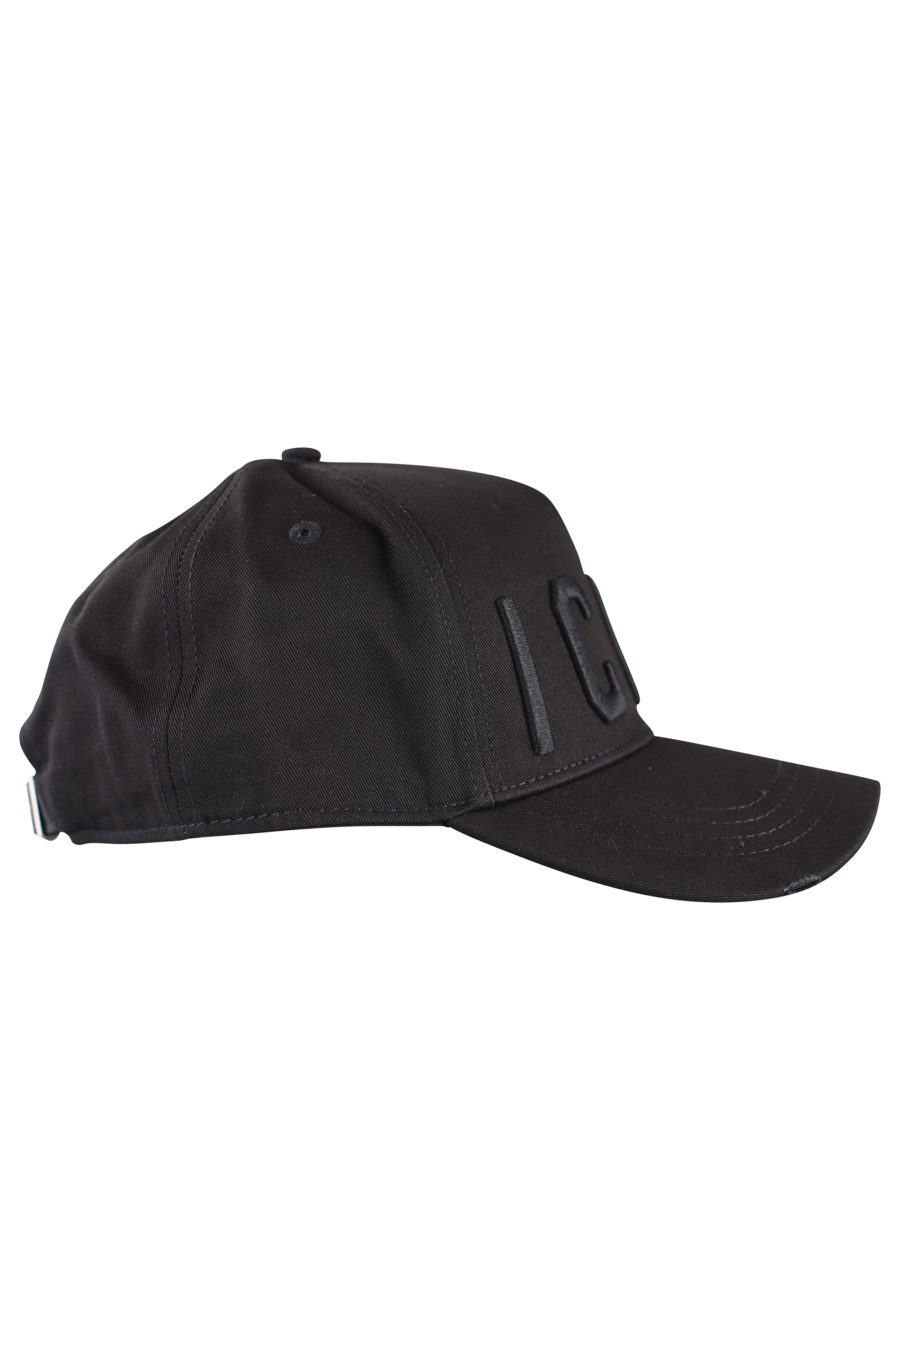 Adjustable black cap with black "icon" logo - IMG 9972